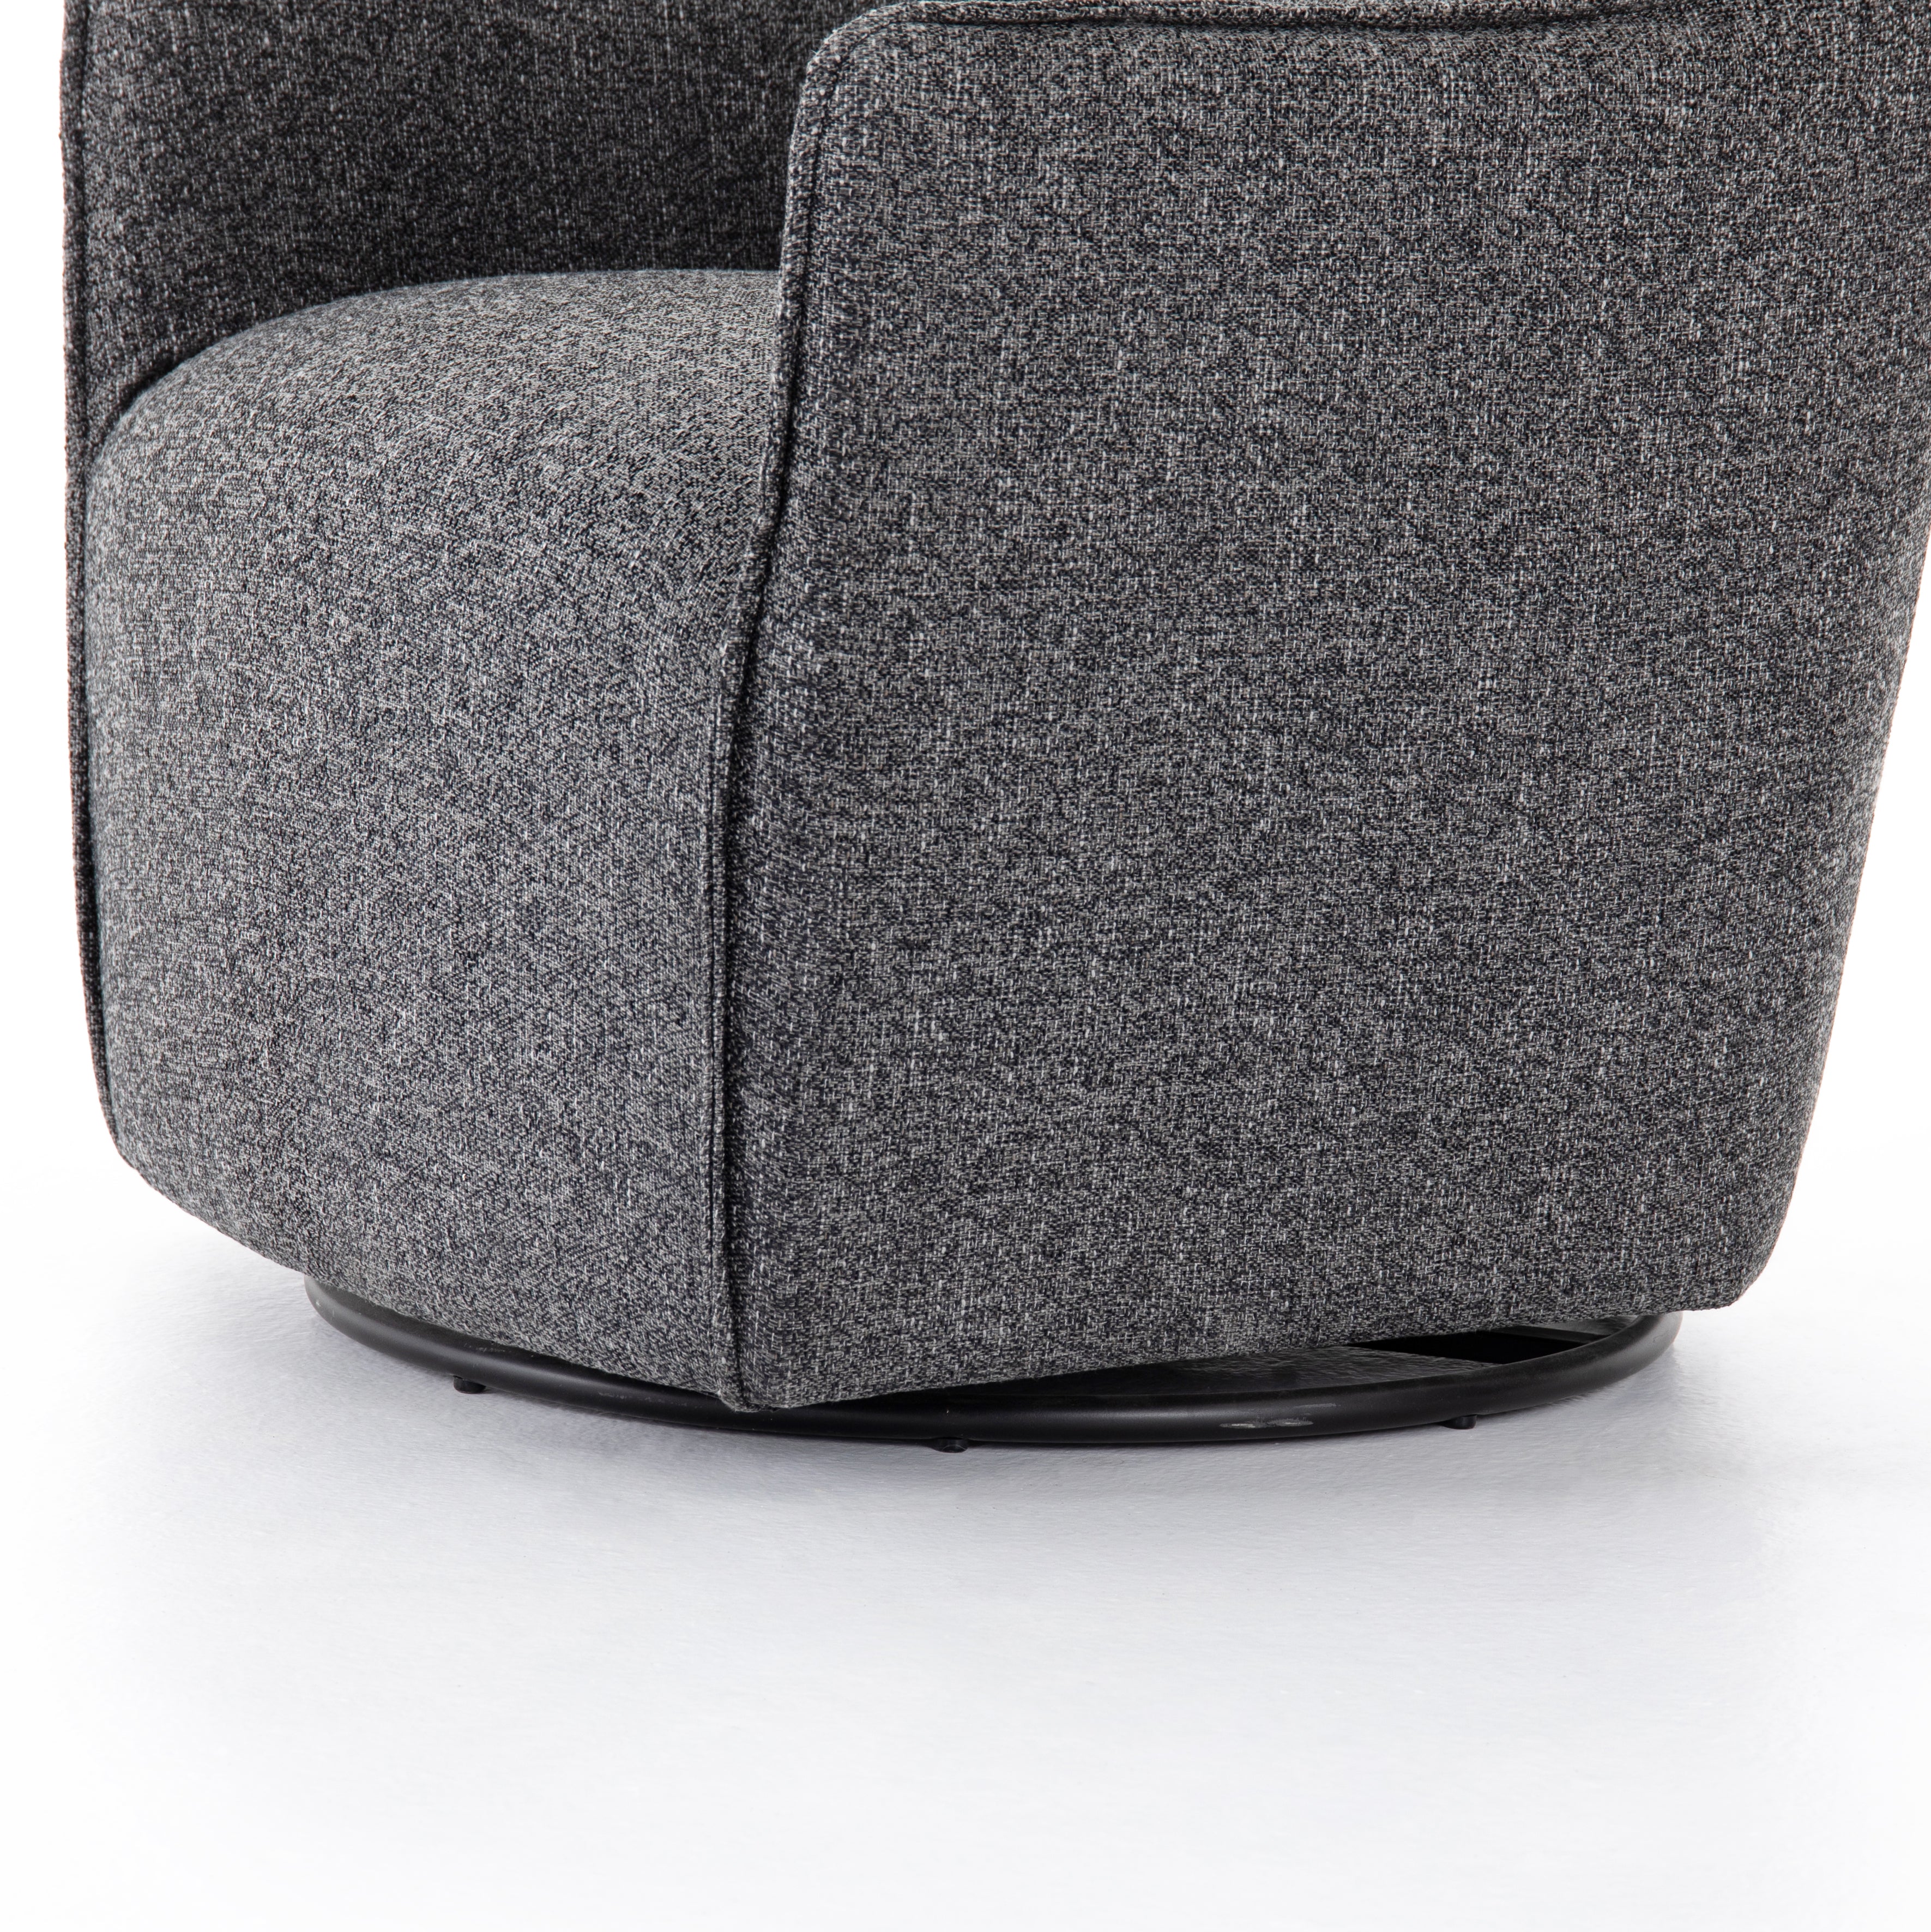 Bristol Charcoal Fabric | Kimble Swivel Chair | Valley Ridge Furniture